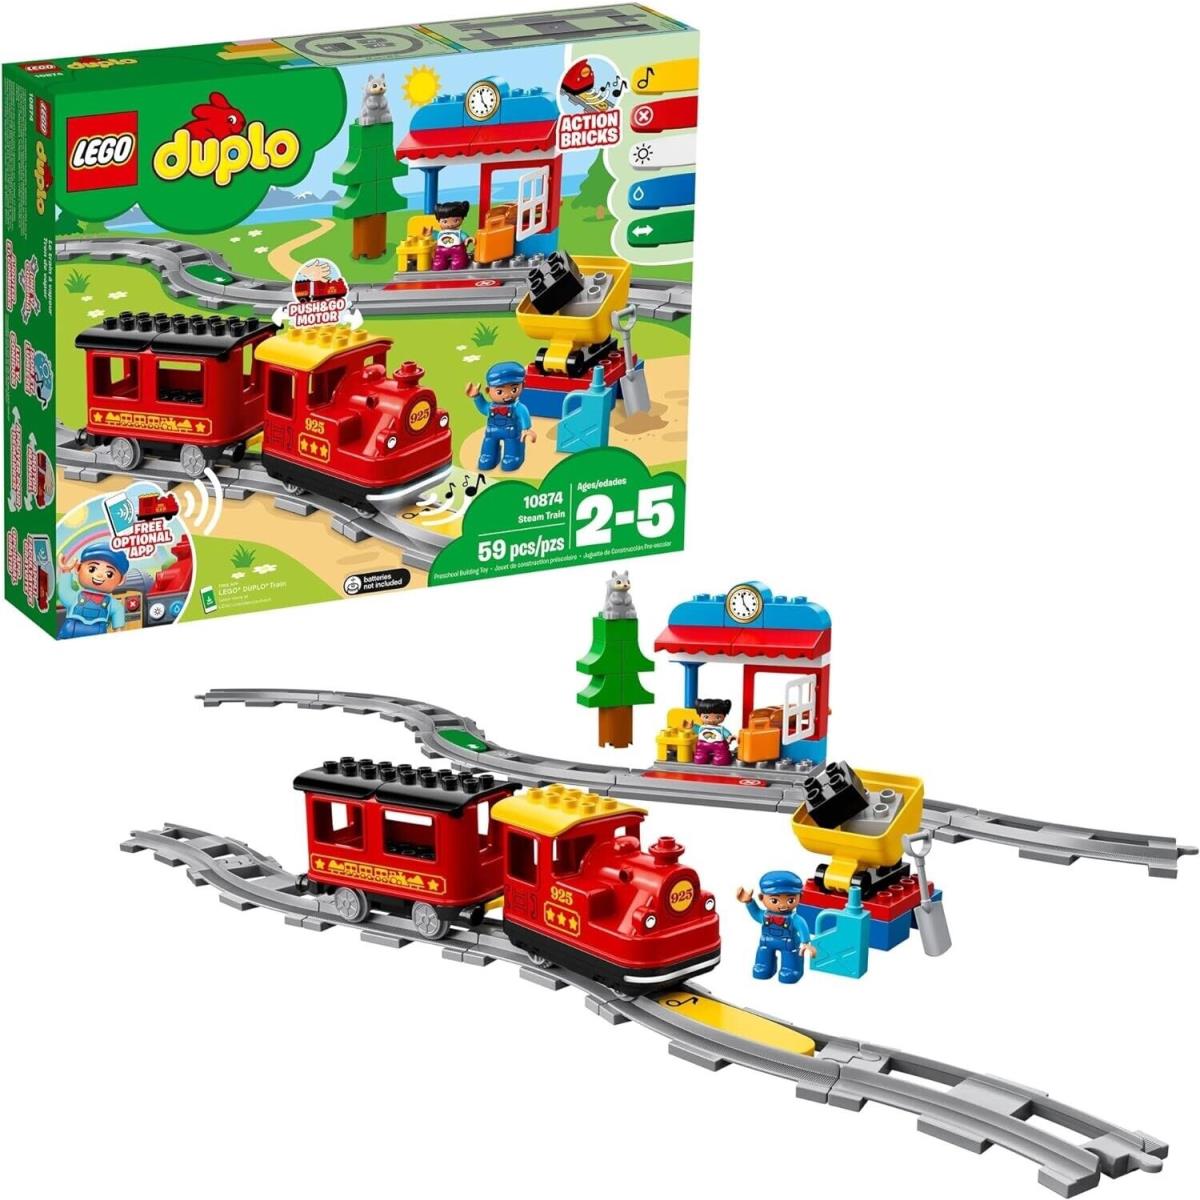 Lego Duplo 10874 Steam Train -new